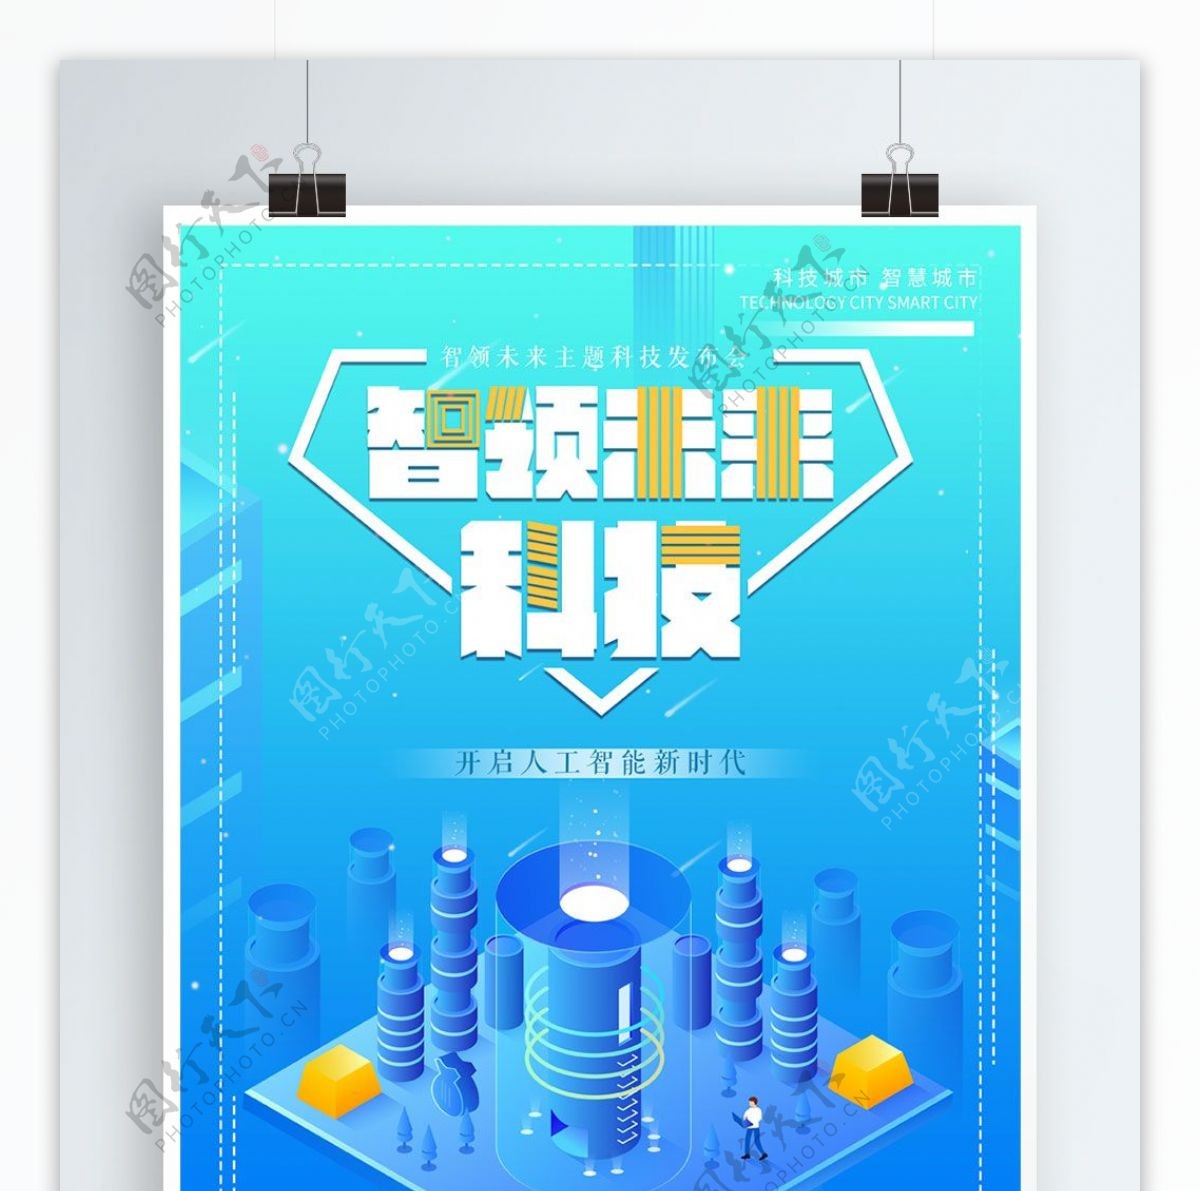 2.5D简约蓝色科技宣传海报设计